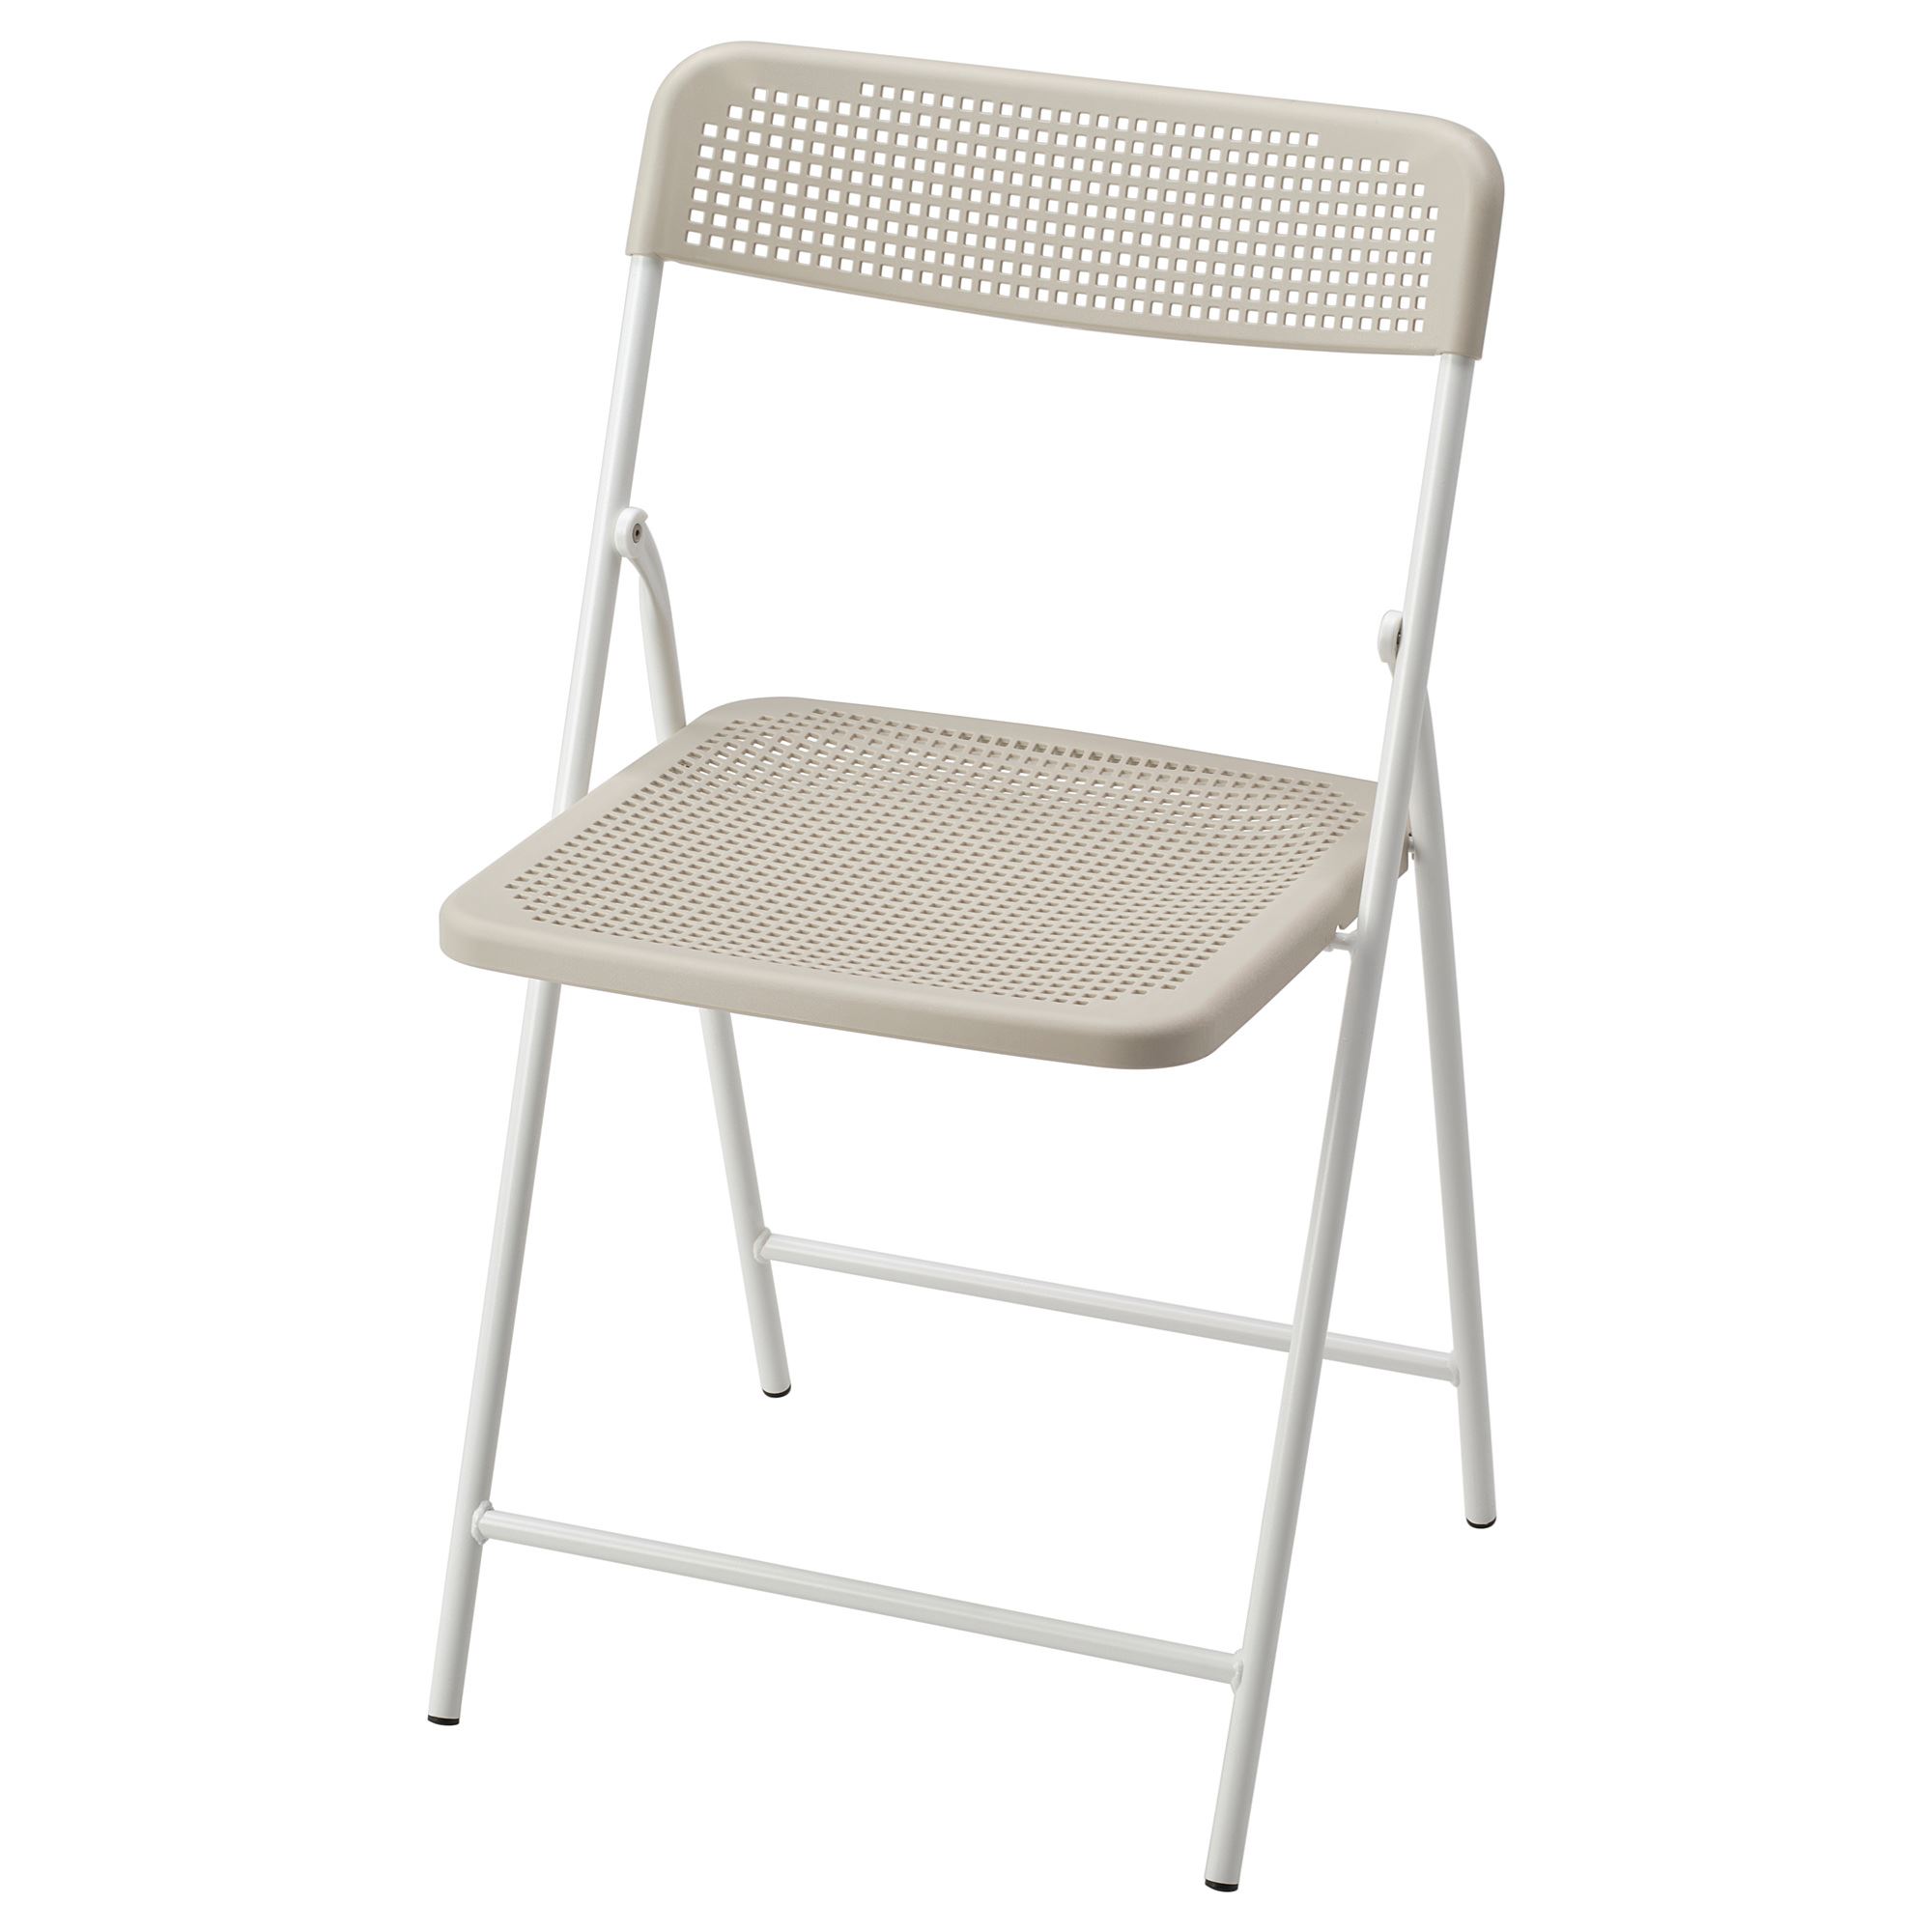 Складные стулья отзывы. Торпарё икеа стул. Стул раскладной ikea белый. Стул складной икеа белый. Икеа стул садовый торпаре.